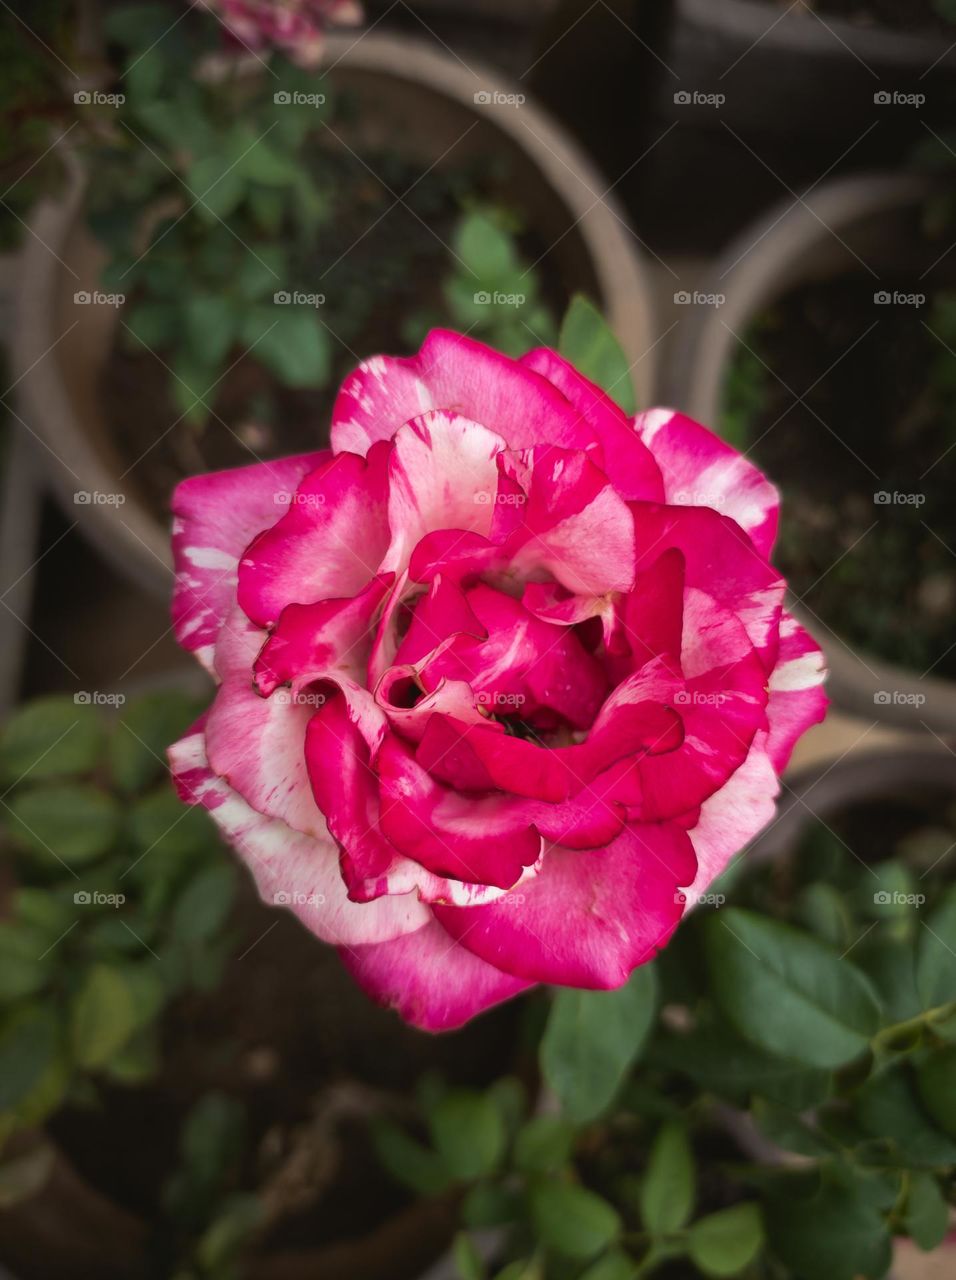 rosas rose pink white Nature detail macro flor flower zoom close UP jardim garden